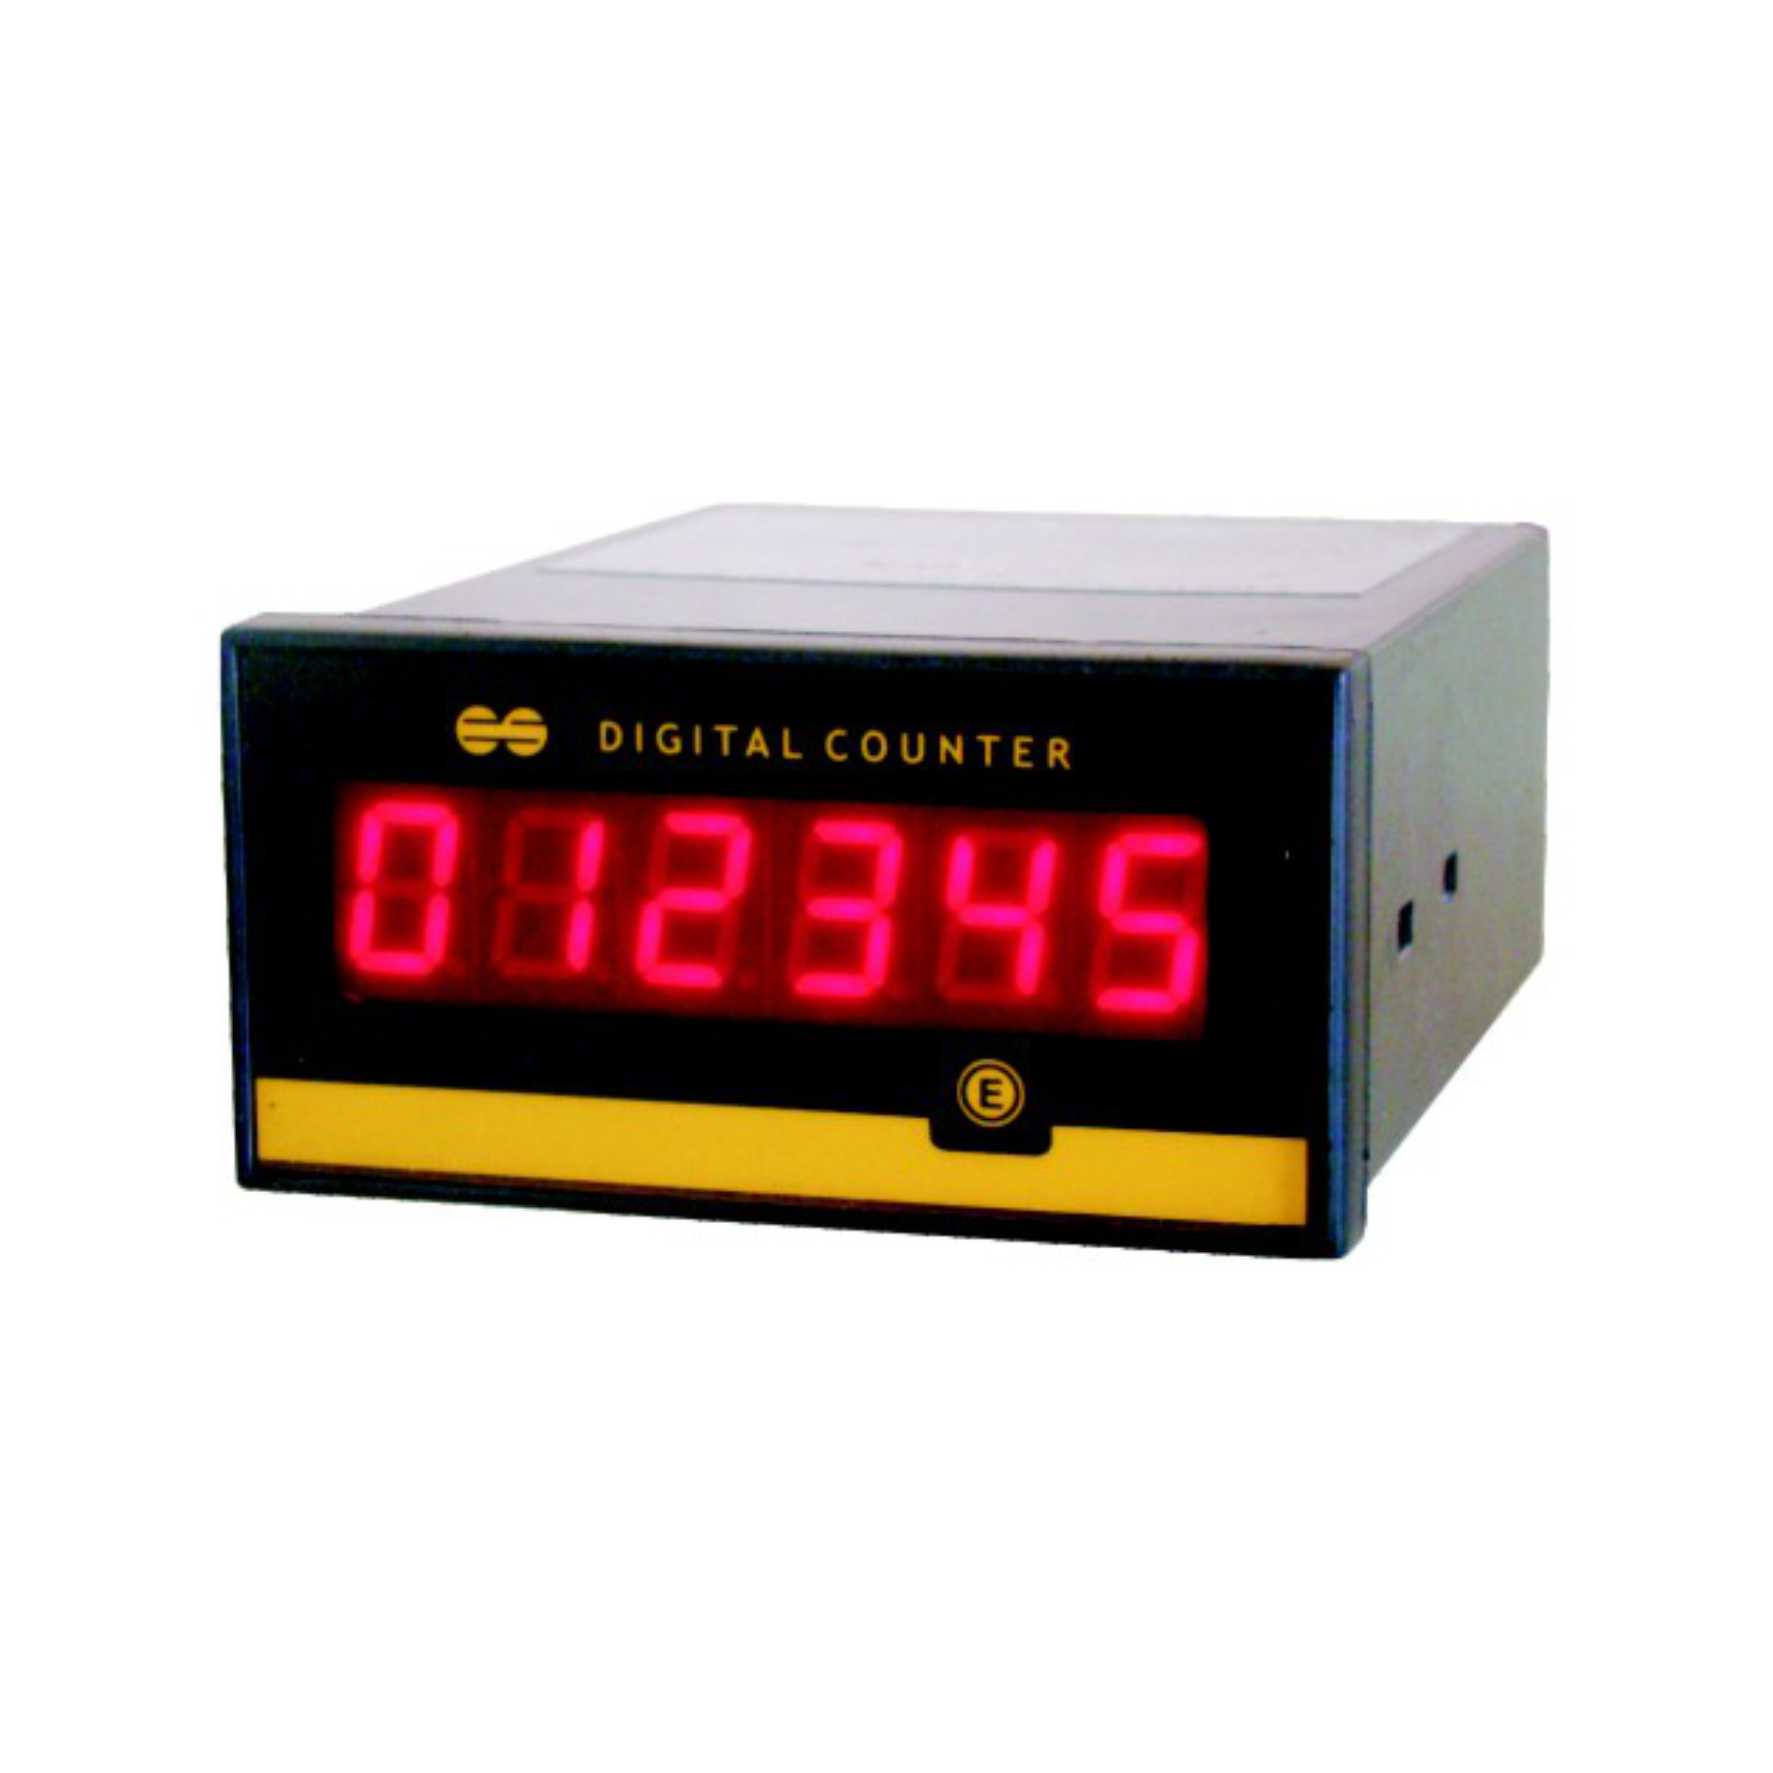 Production Counter / Event Counter / Stroke Counter / Pulse Counter